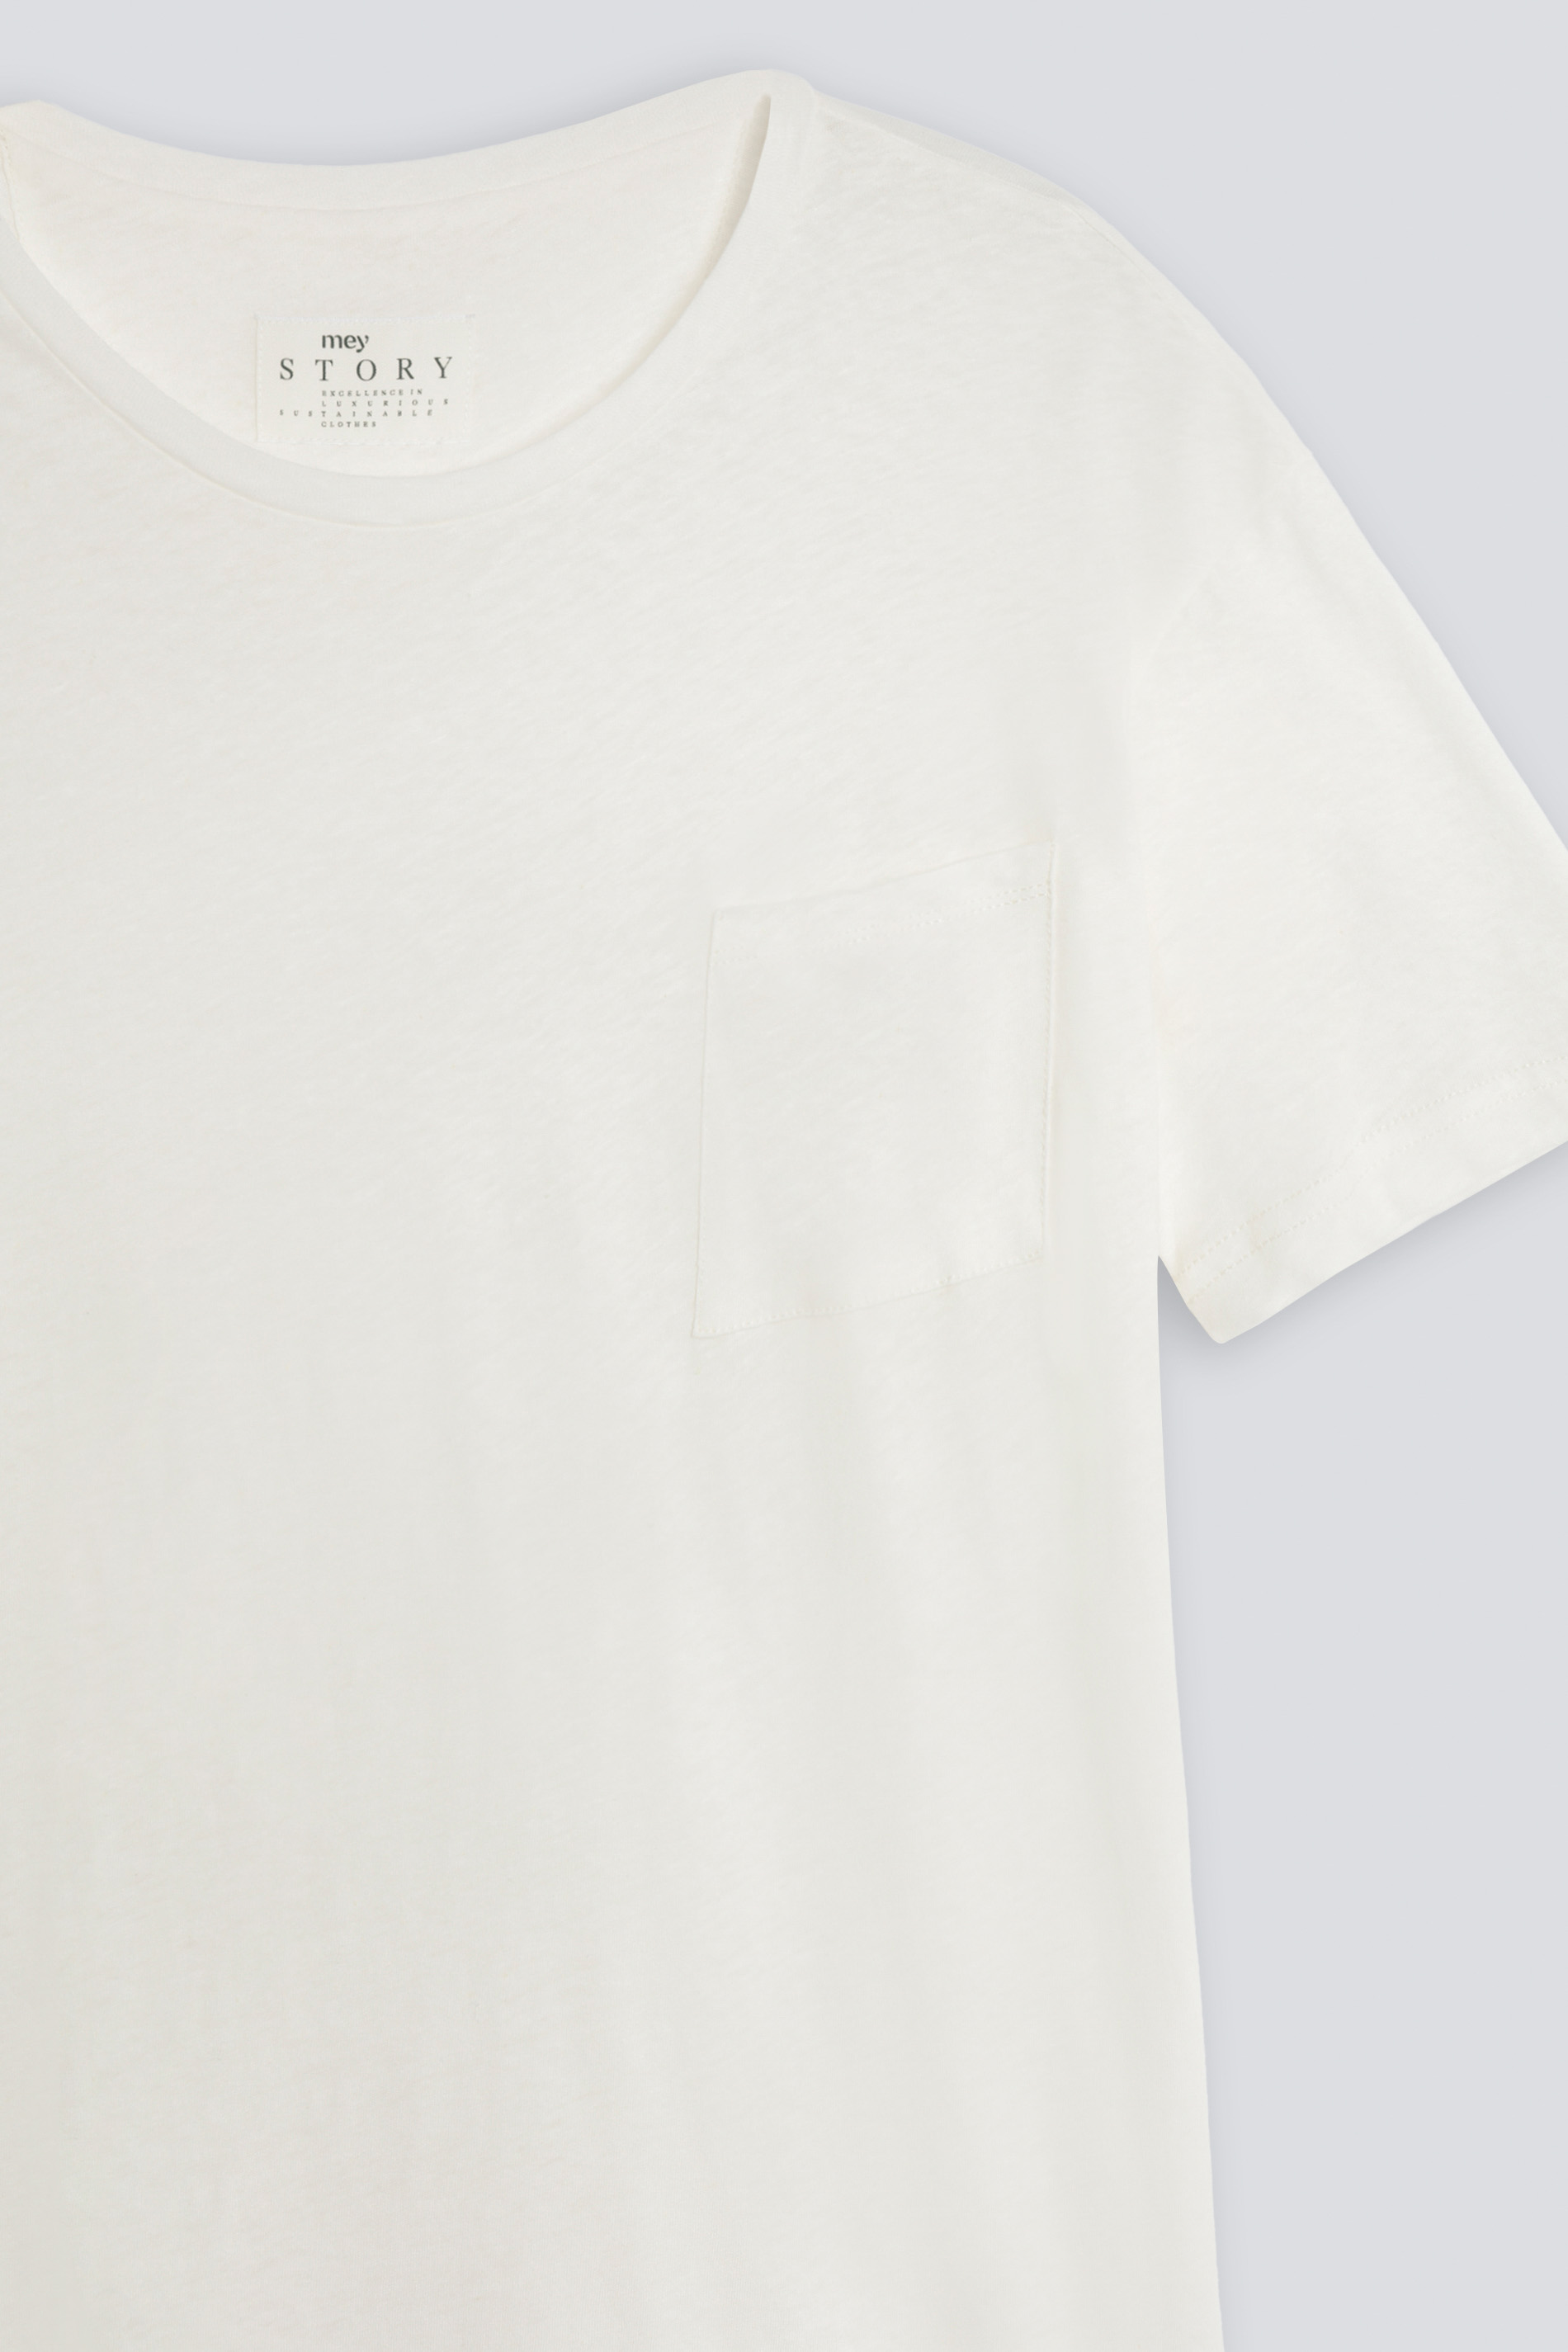 Crew-neck shirt Serie Lino Detail View 01 | mey®